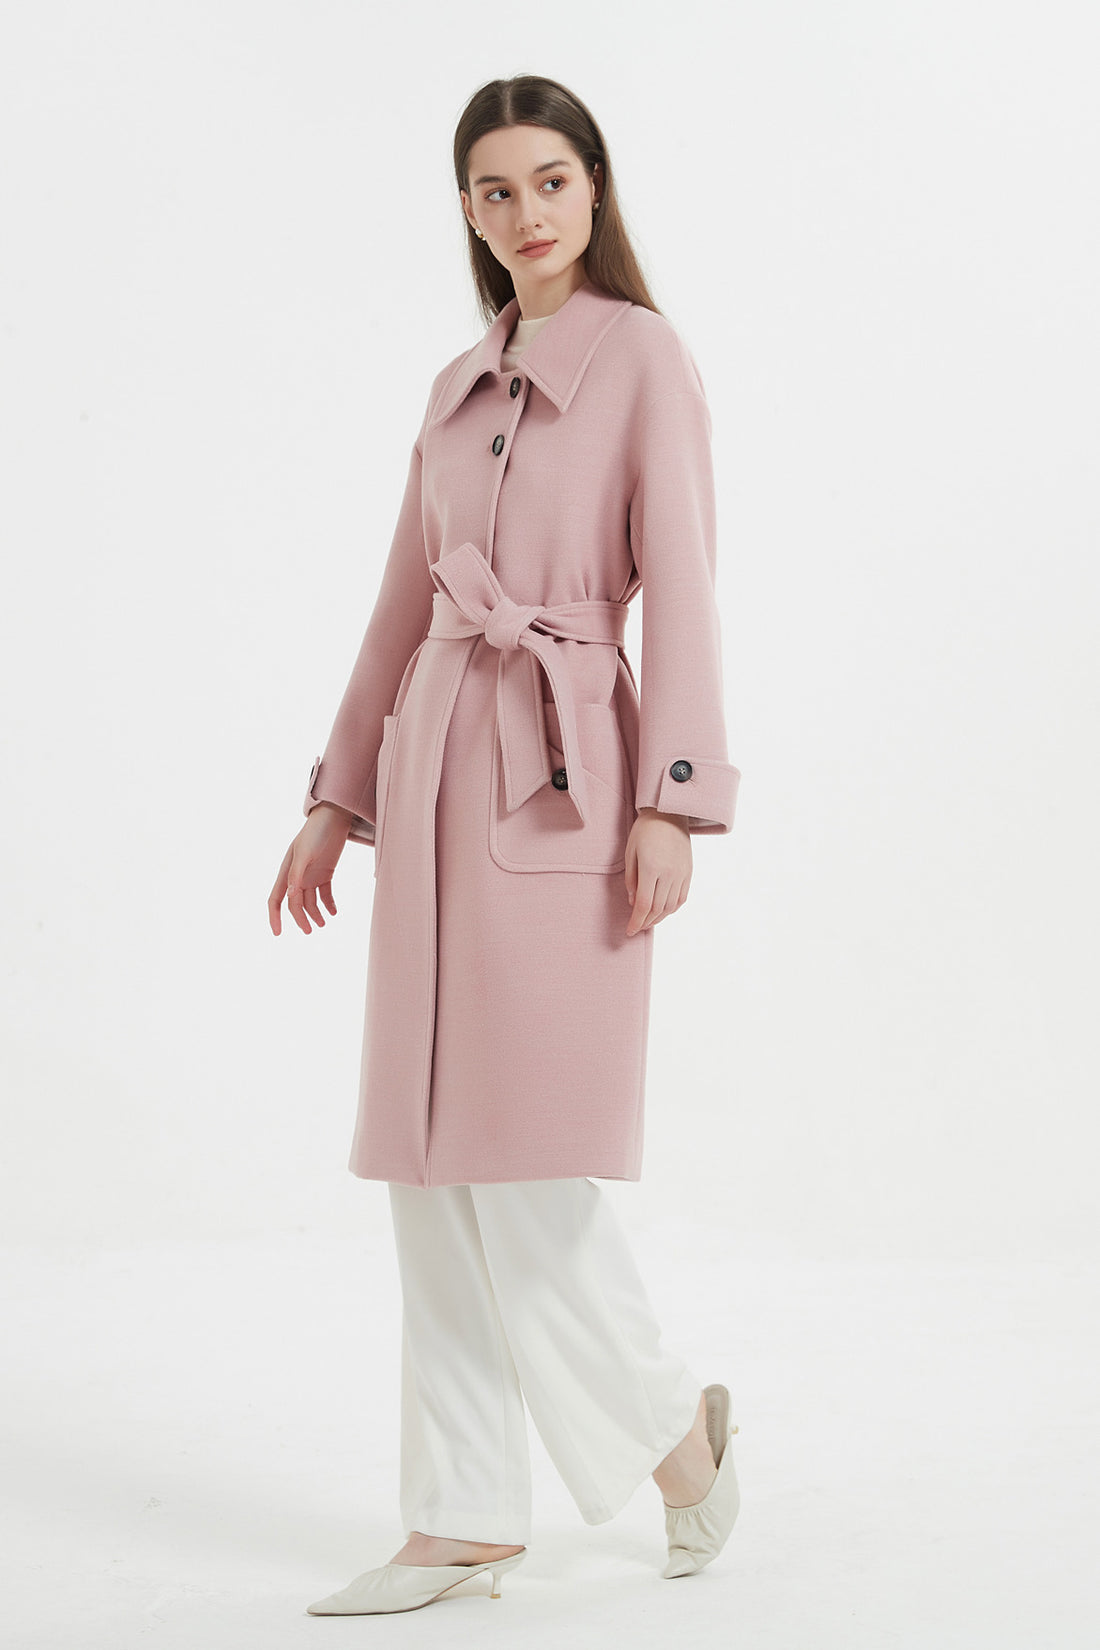 SKYE Shop Chic Modern Elegant Timeless Women Clothing French Parisian Minimalist Annabelle Long Wool Coat Pink 2